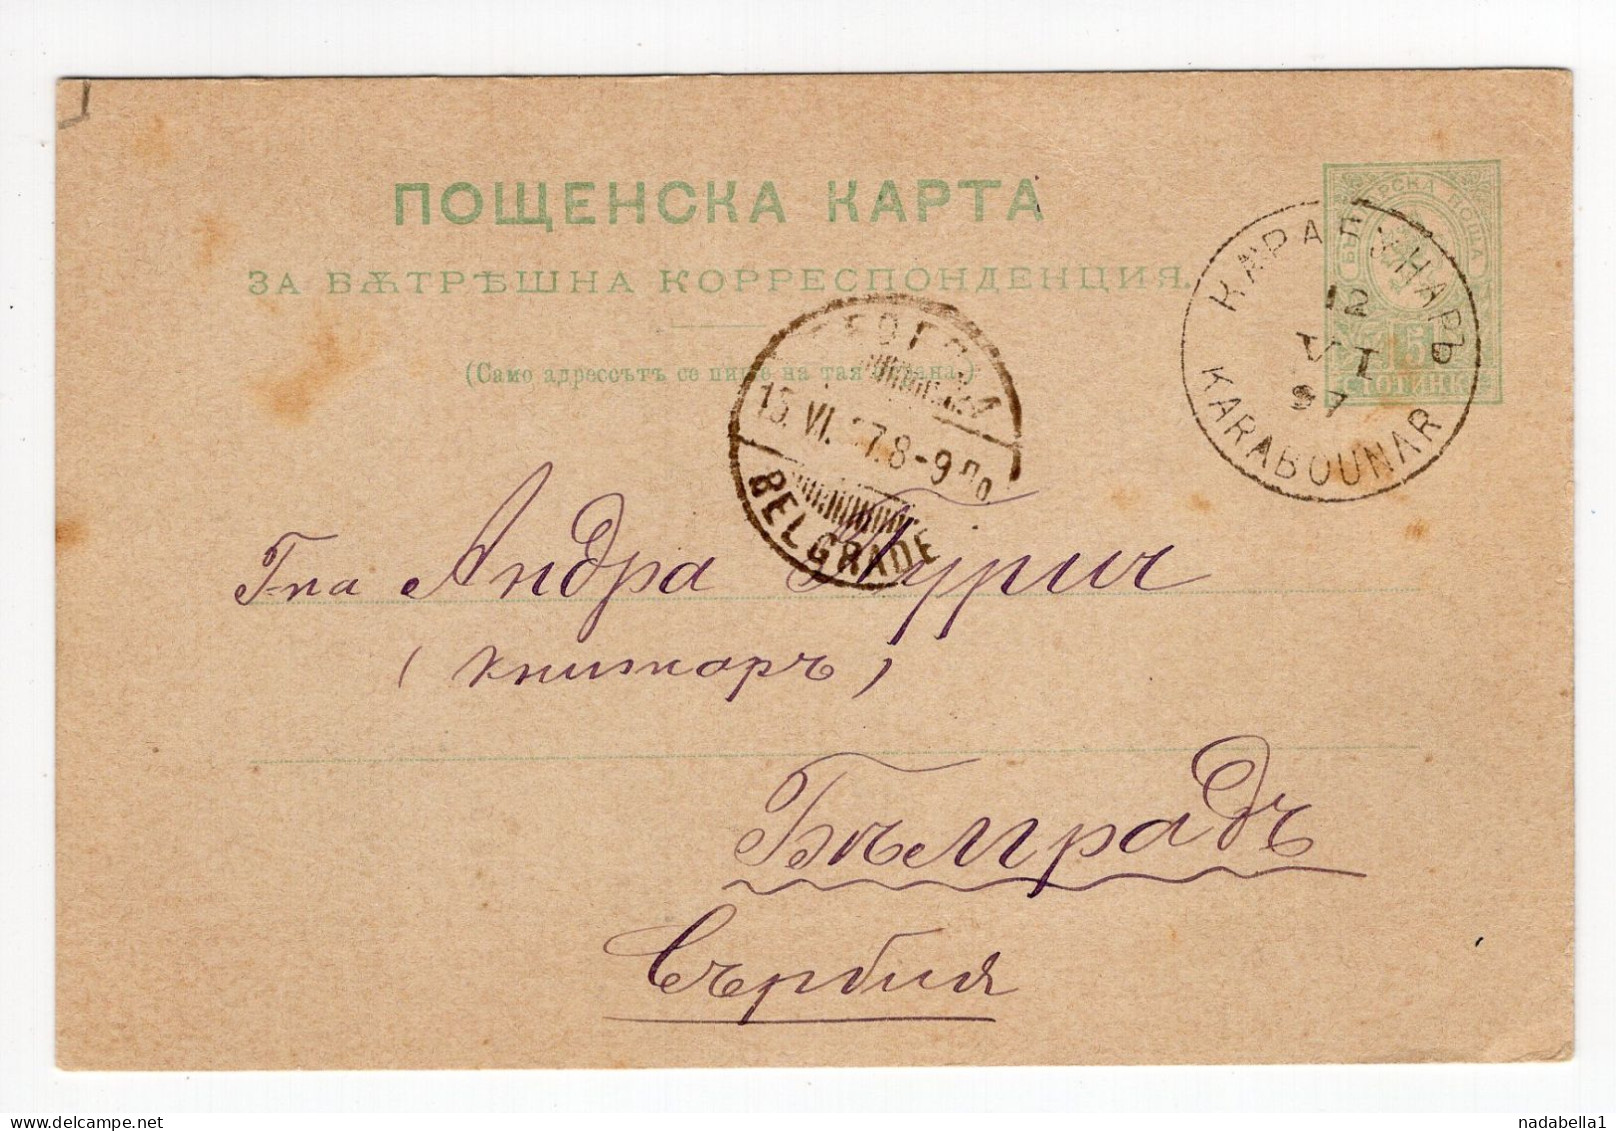 1897. BULGARIA,KARABOUNAR,STATIONERY CARD,USED TO BELGRADE,SERBIA - Cartes Postales